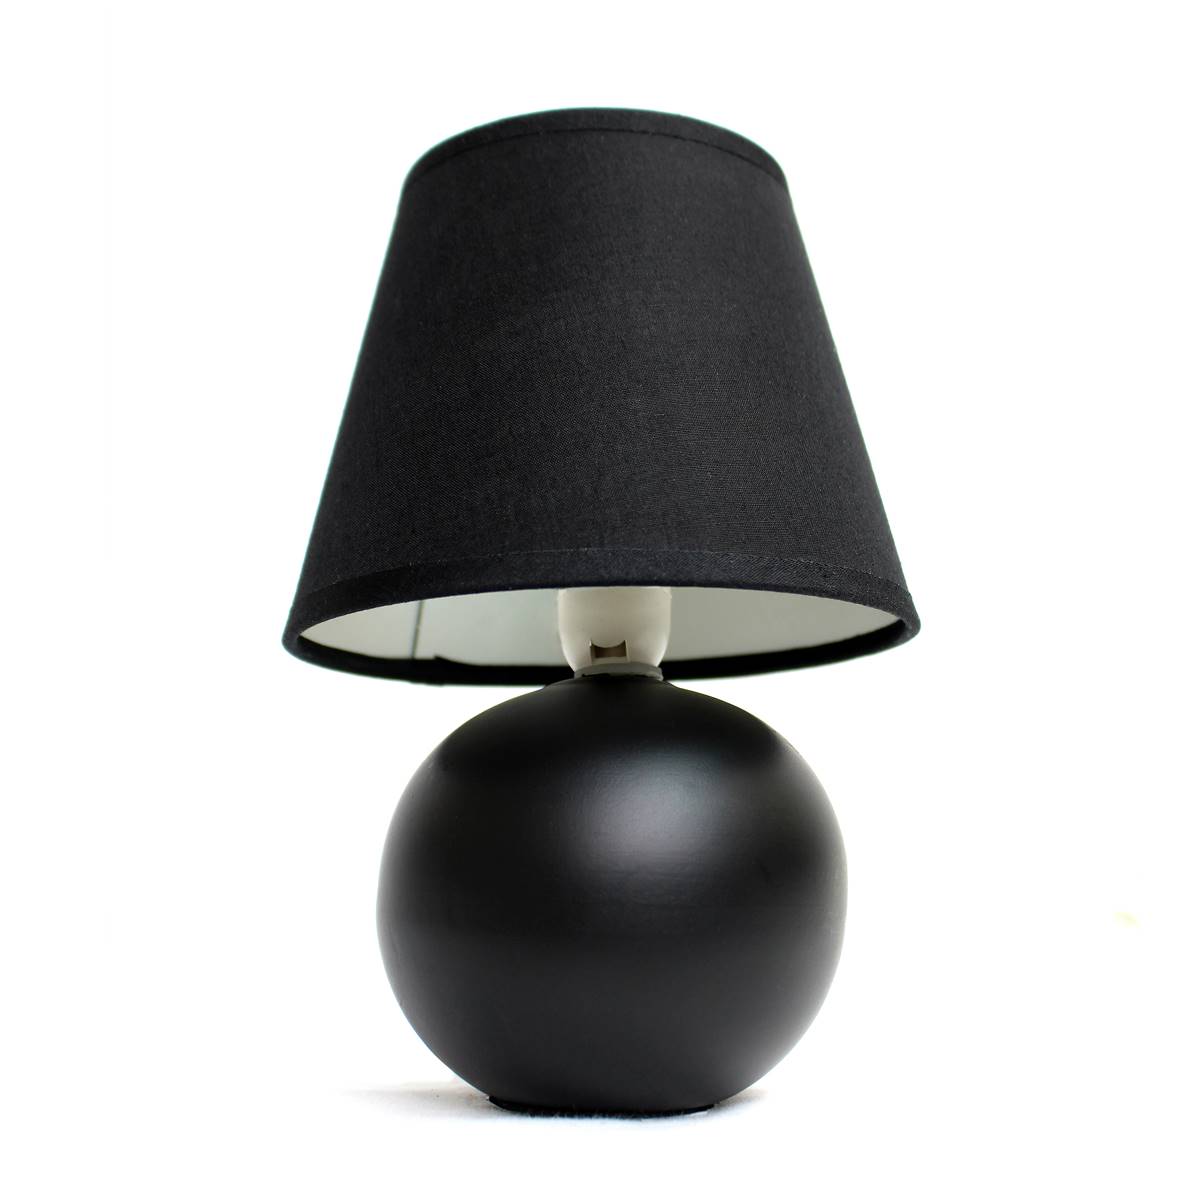 Simple Designs Mini Ceramic Globe Table Lamp